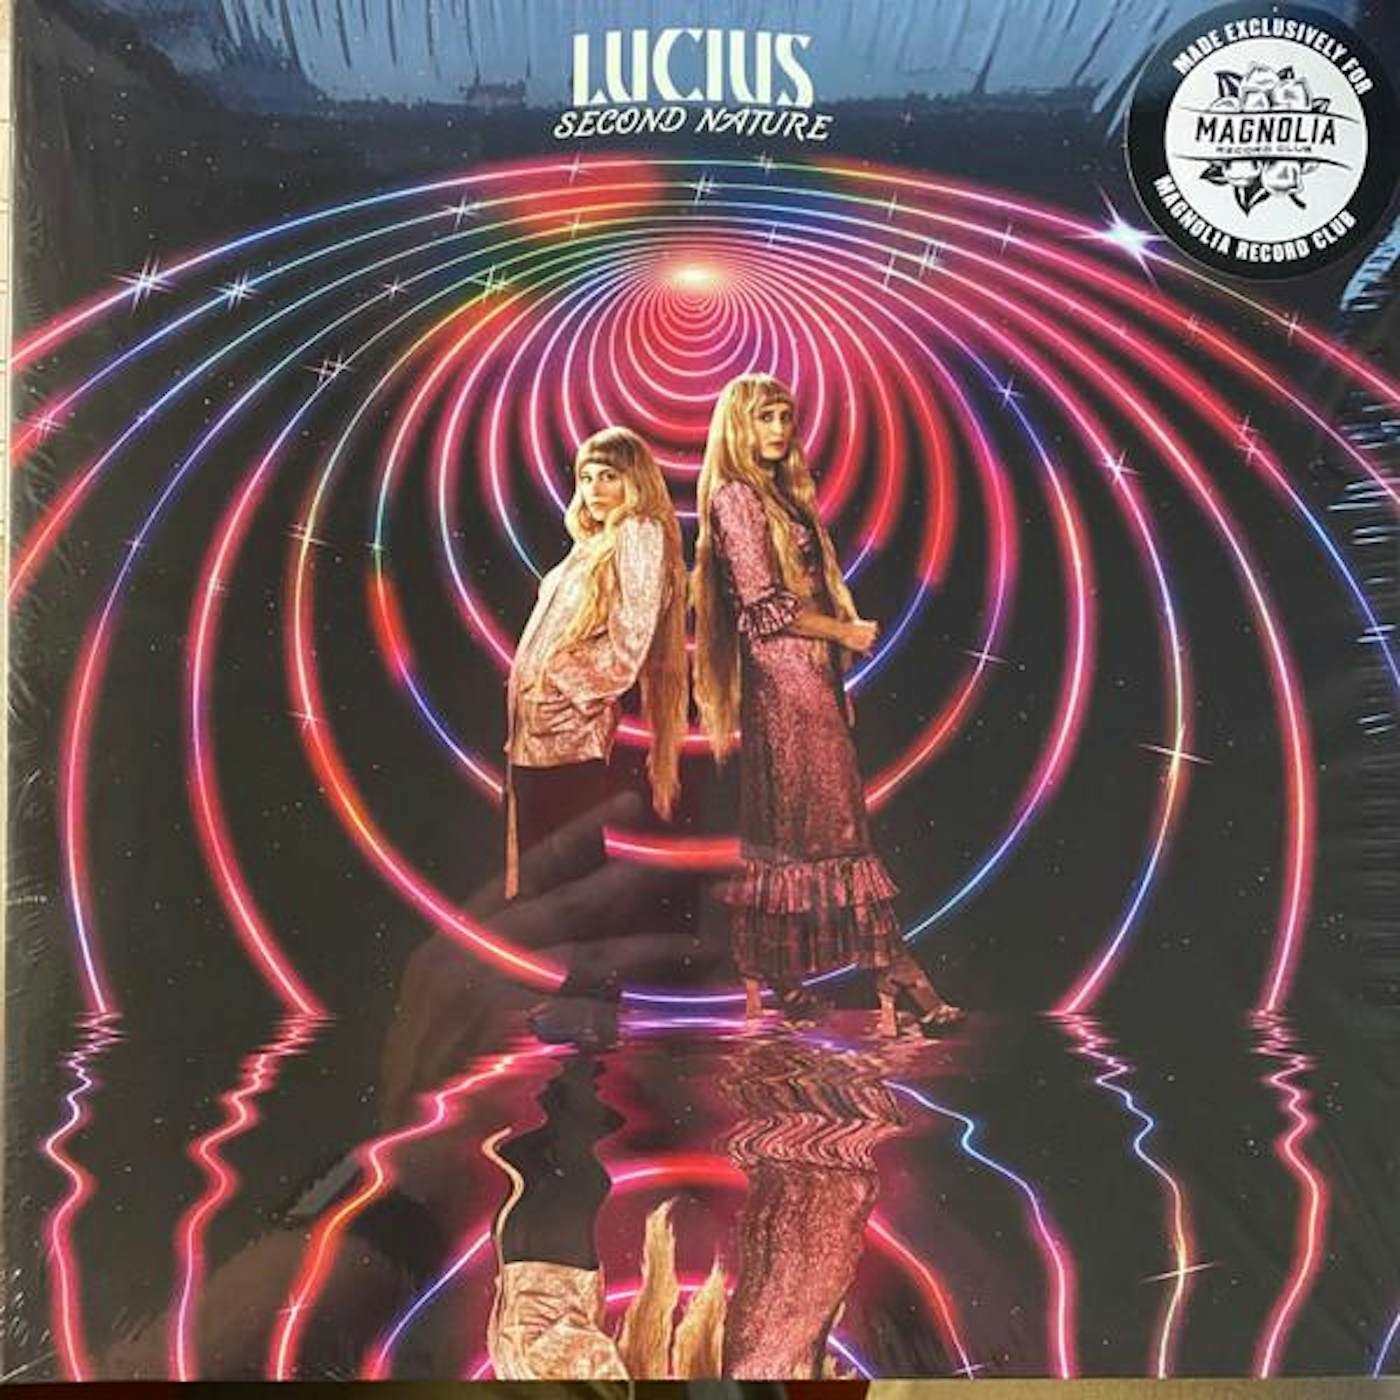 Lucius SECOND NATURE (DISCO BALL SILVER VINYL) Vinyl Record